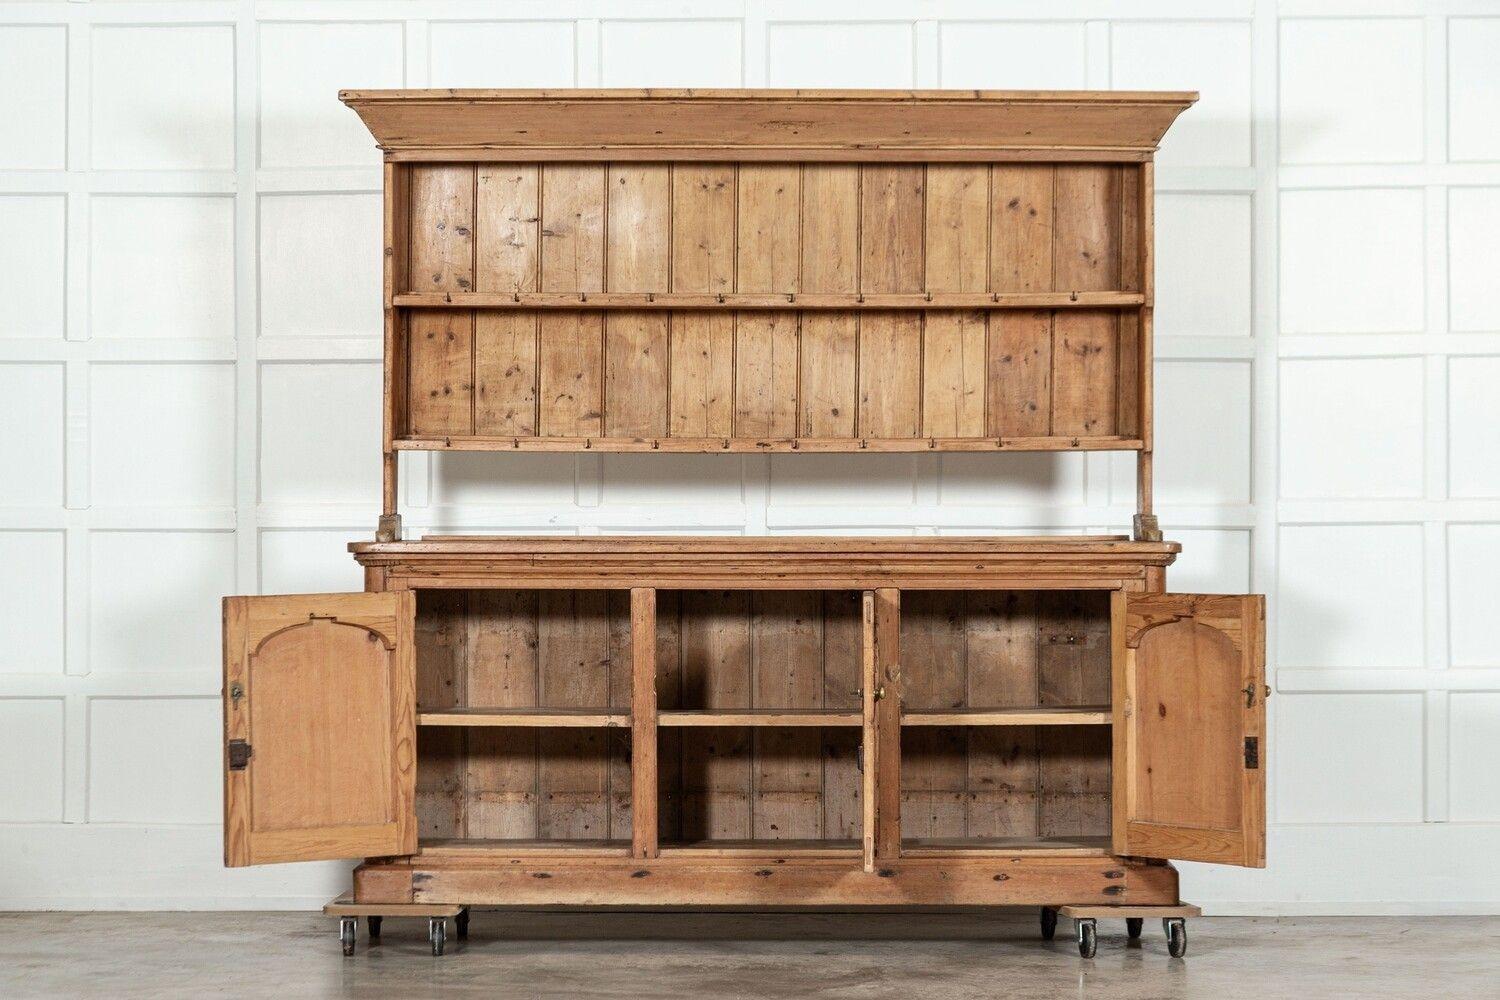 sku 1870
Large 19thc English Pine Vernacular Dresser
sku 1646
Base W183 x D49 x H79 cm
Top W190 x D33 x H101 cm
Together W190 x D49 x H180 cm